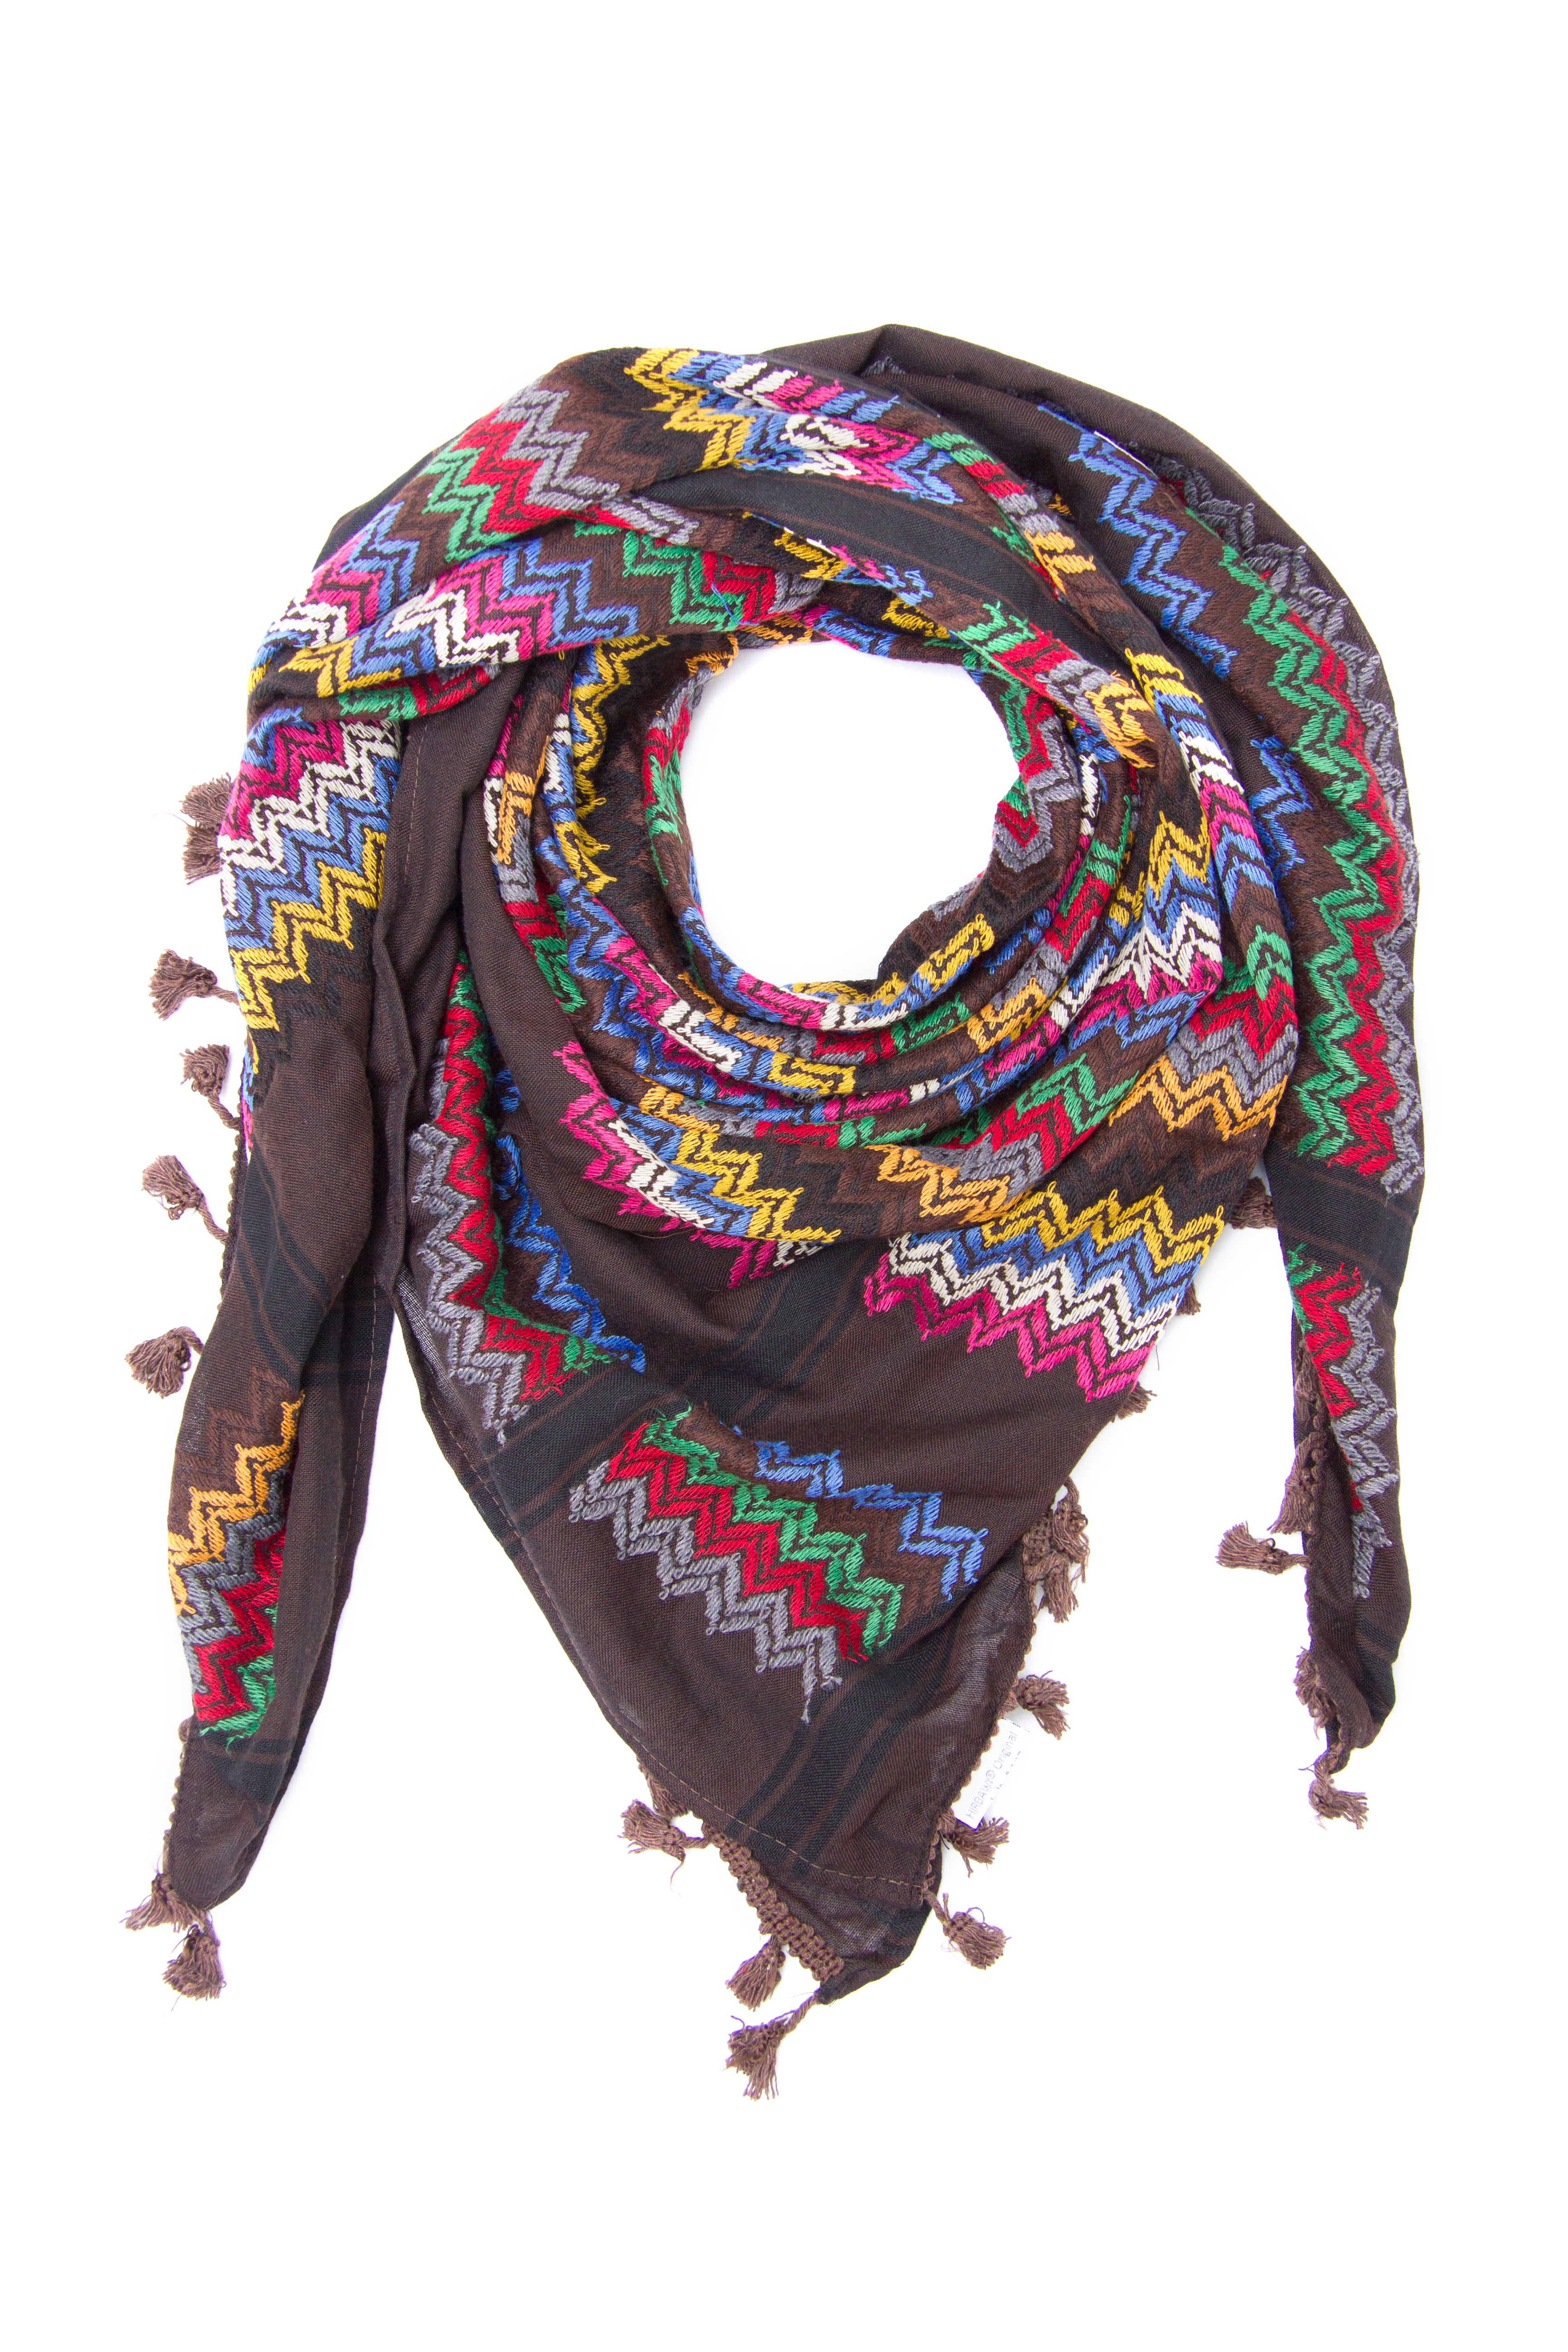 Hirbawi Brown chocolate keffiyeh fashion scarf